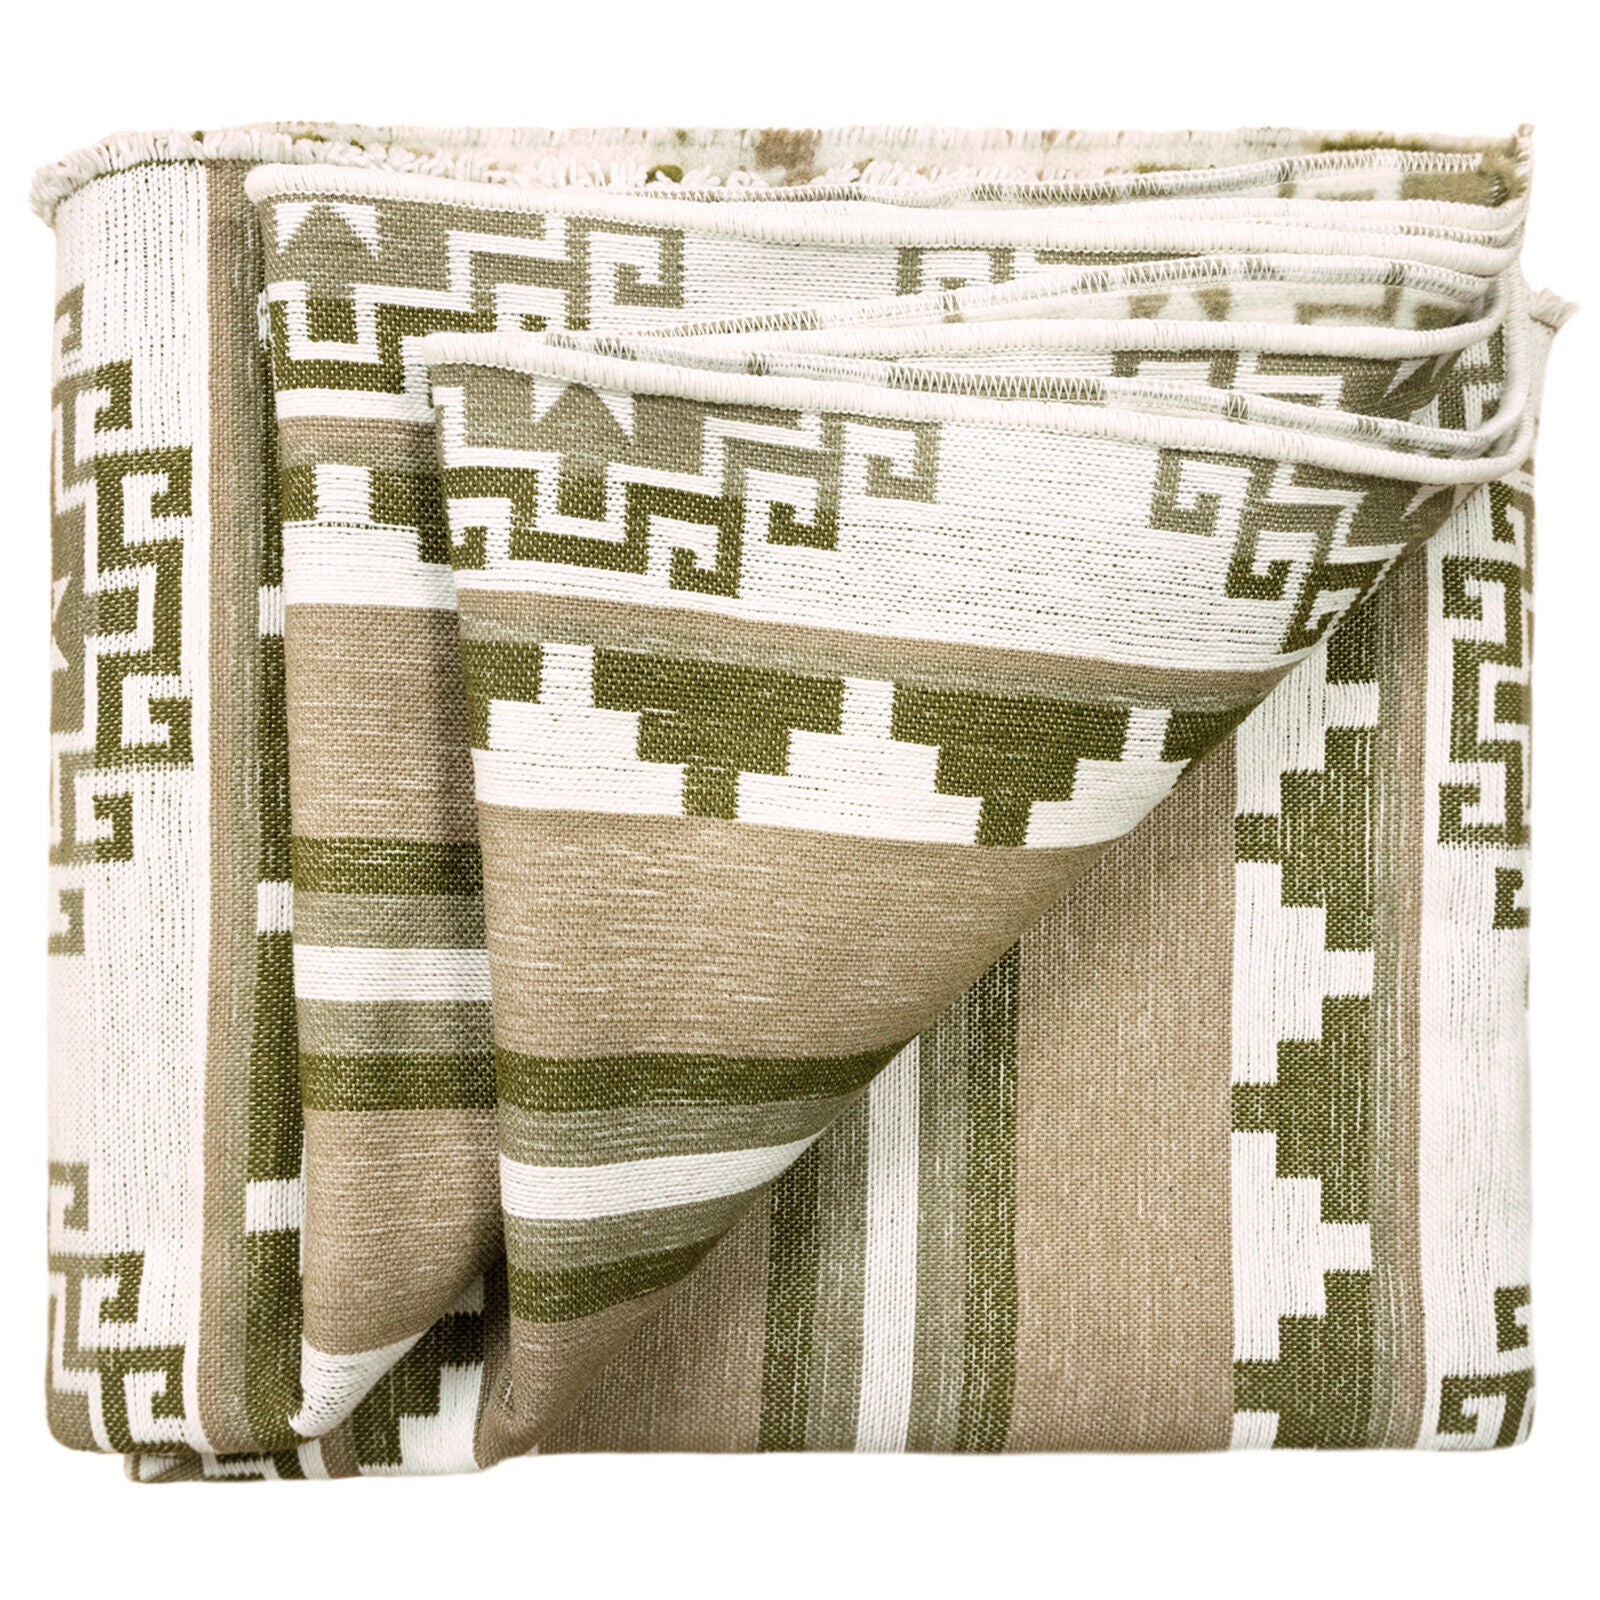 Dayuma - Heavy and Thick Extra Large Llama wool artisanal handwoven Blanket - Cream/Sage - Aztec Pattern